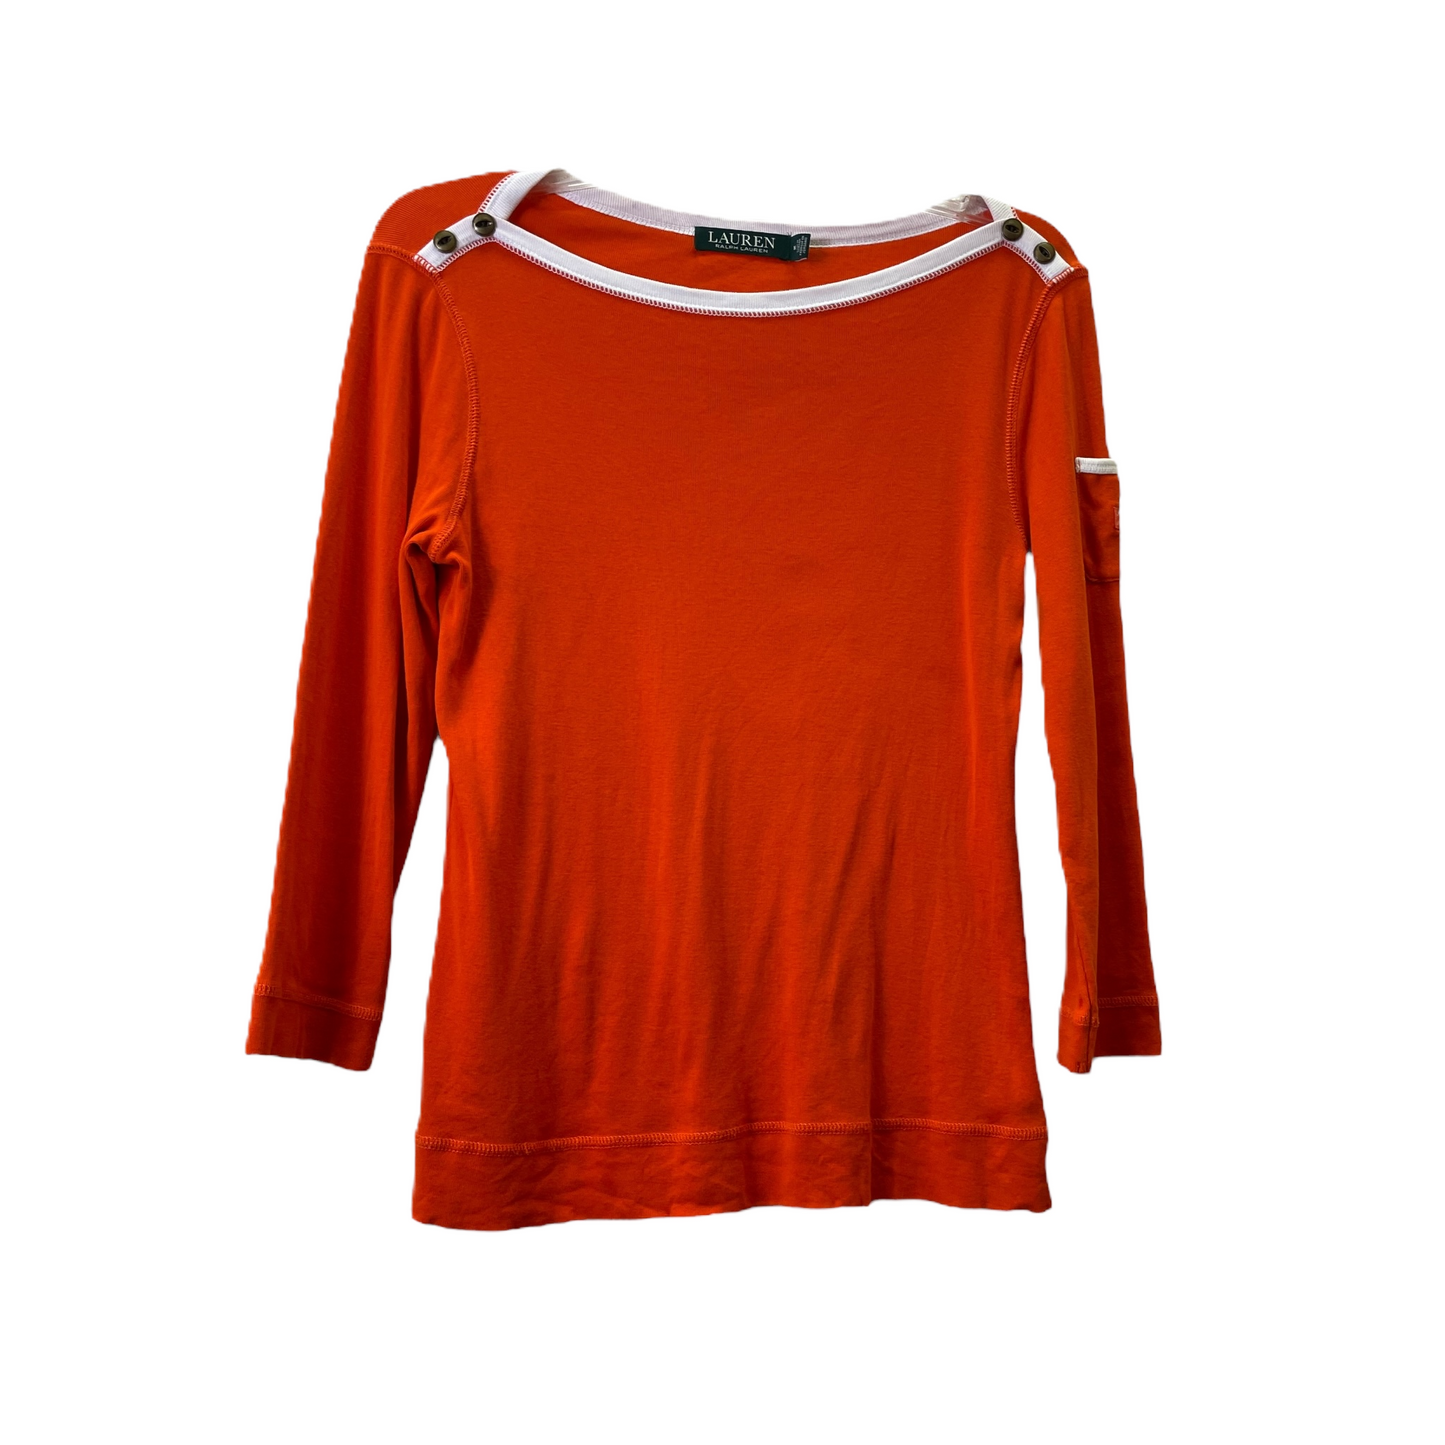 Orange Top Long Sleeve Basic By Ralph Lauren, Size: M